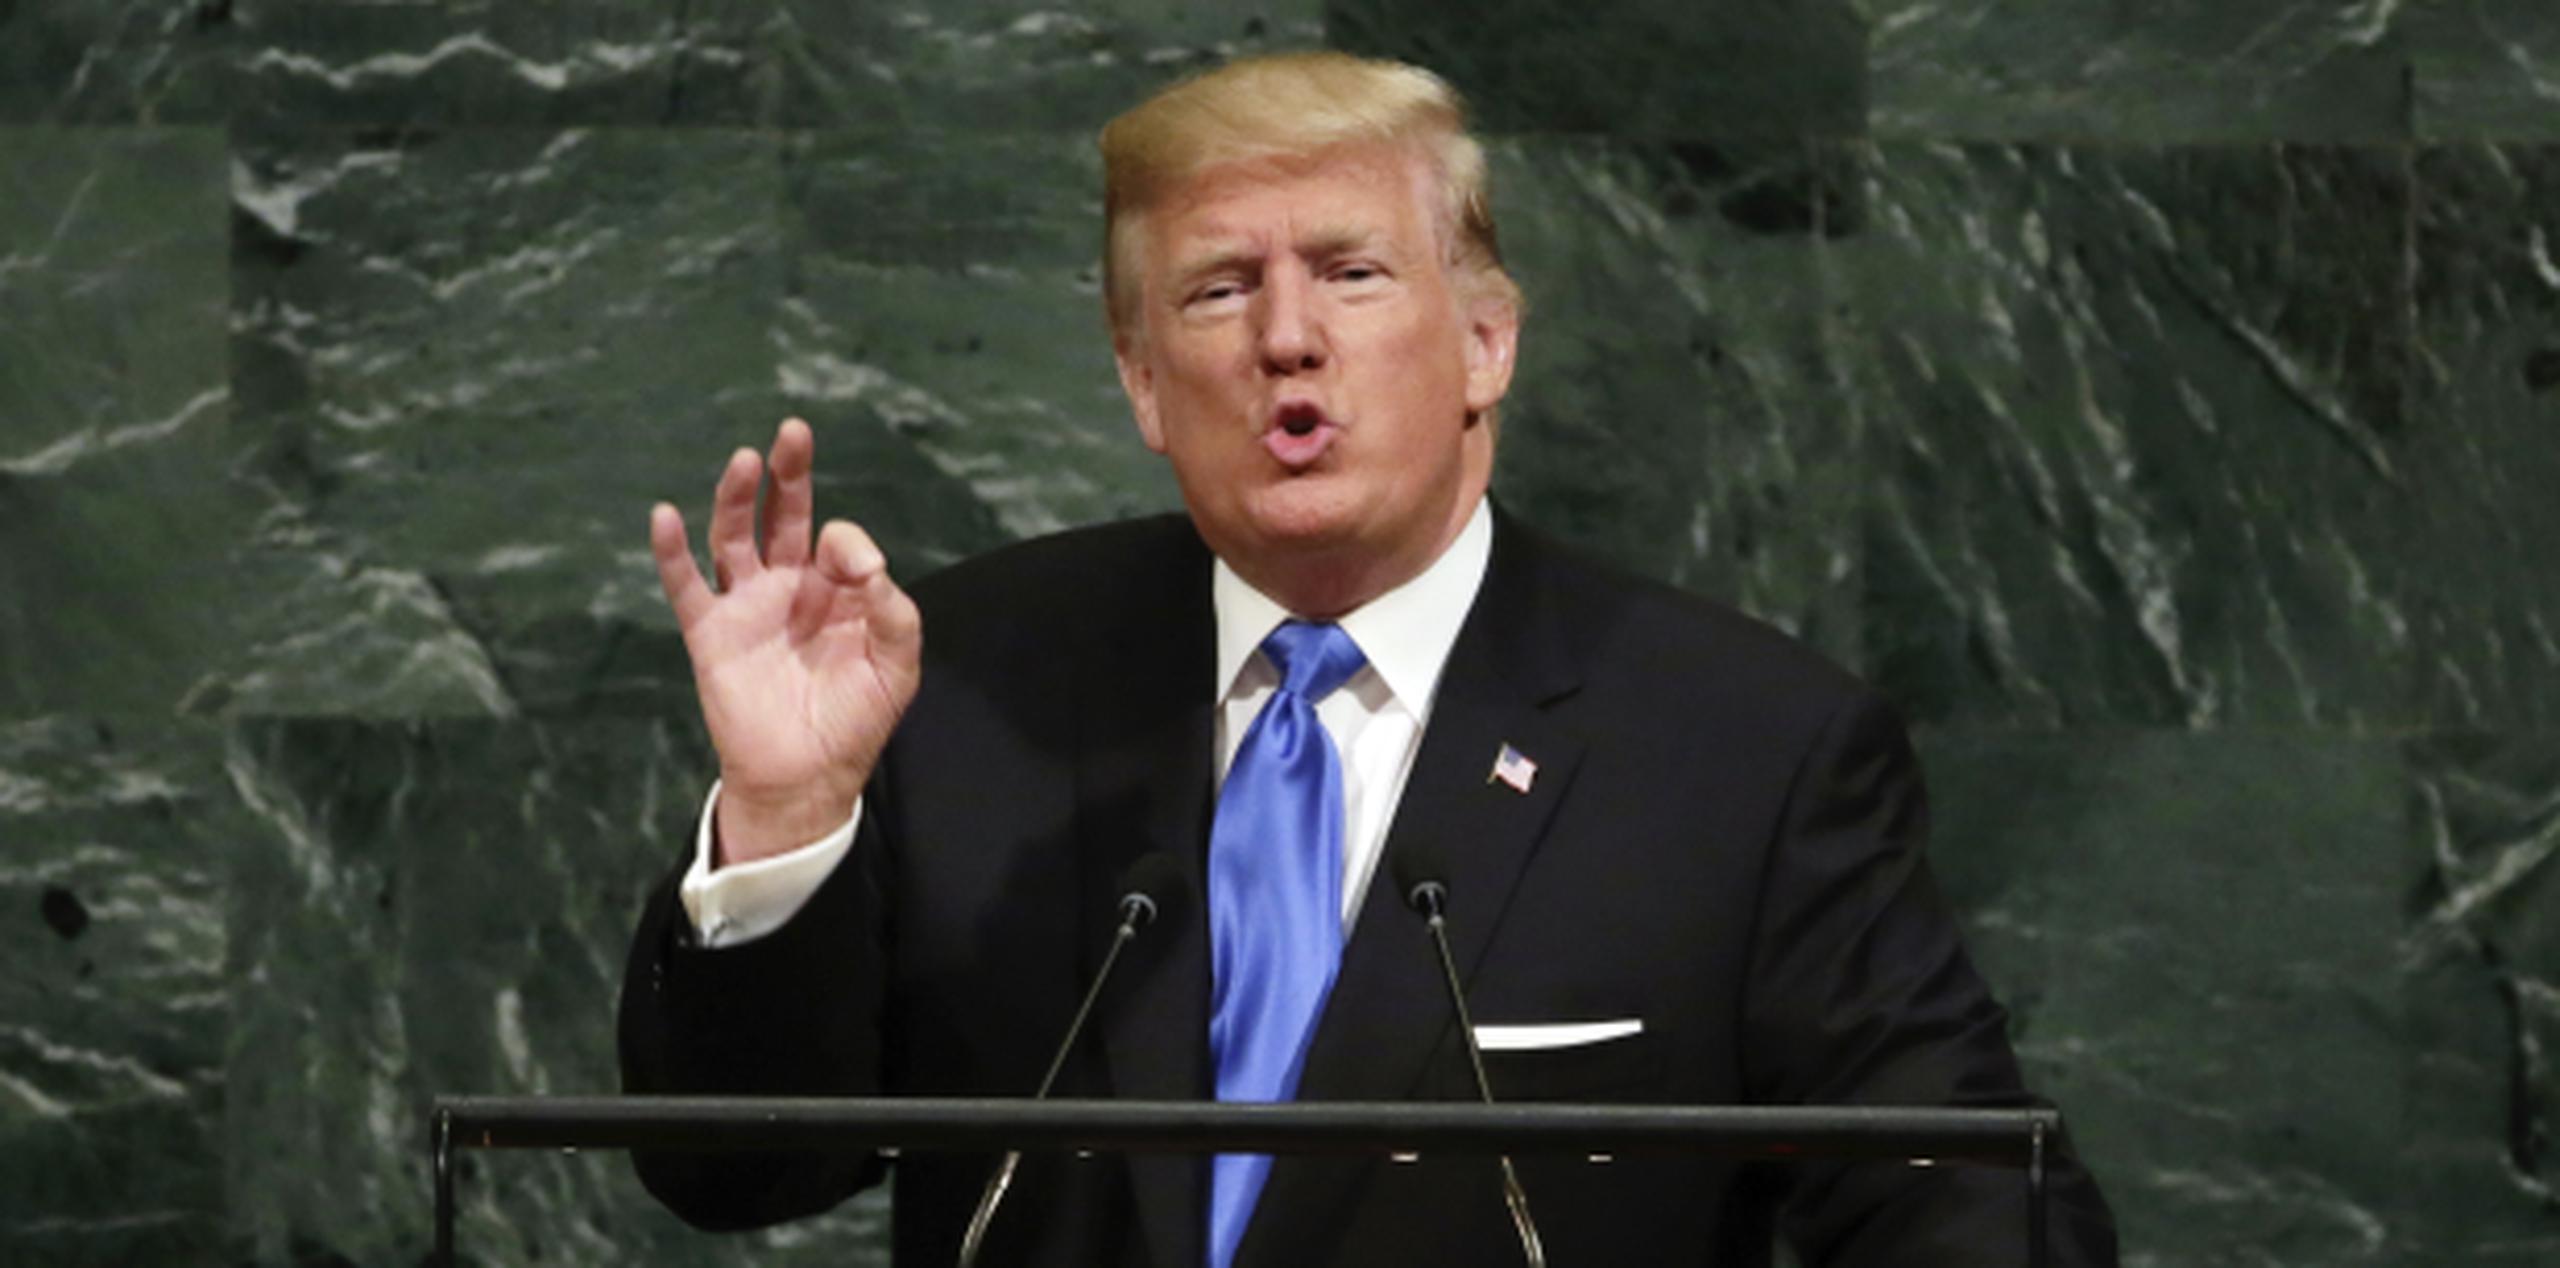 Países como Rusia o China quedaron fuera del discurso de Trump. (AP / Richard Drew)